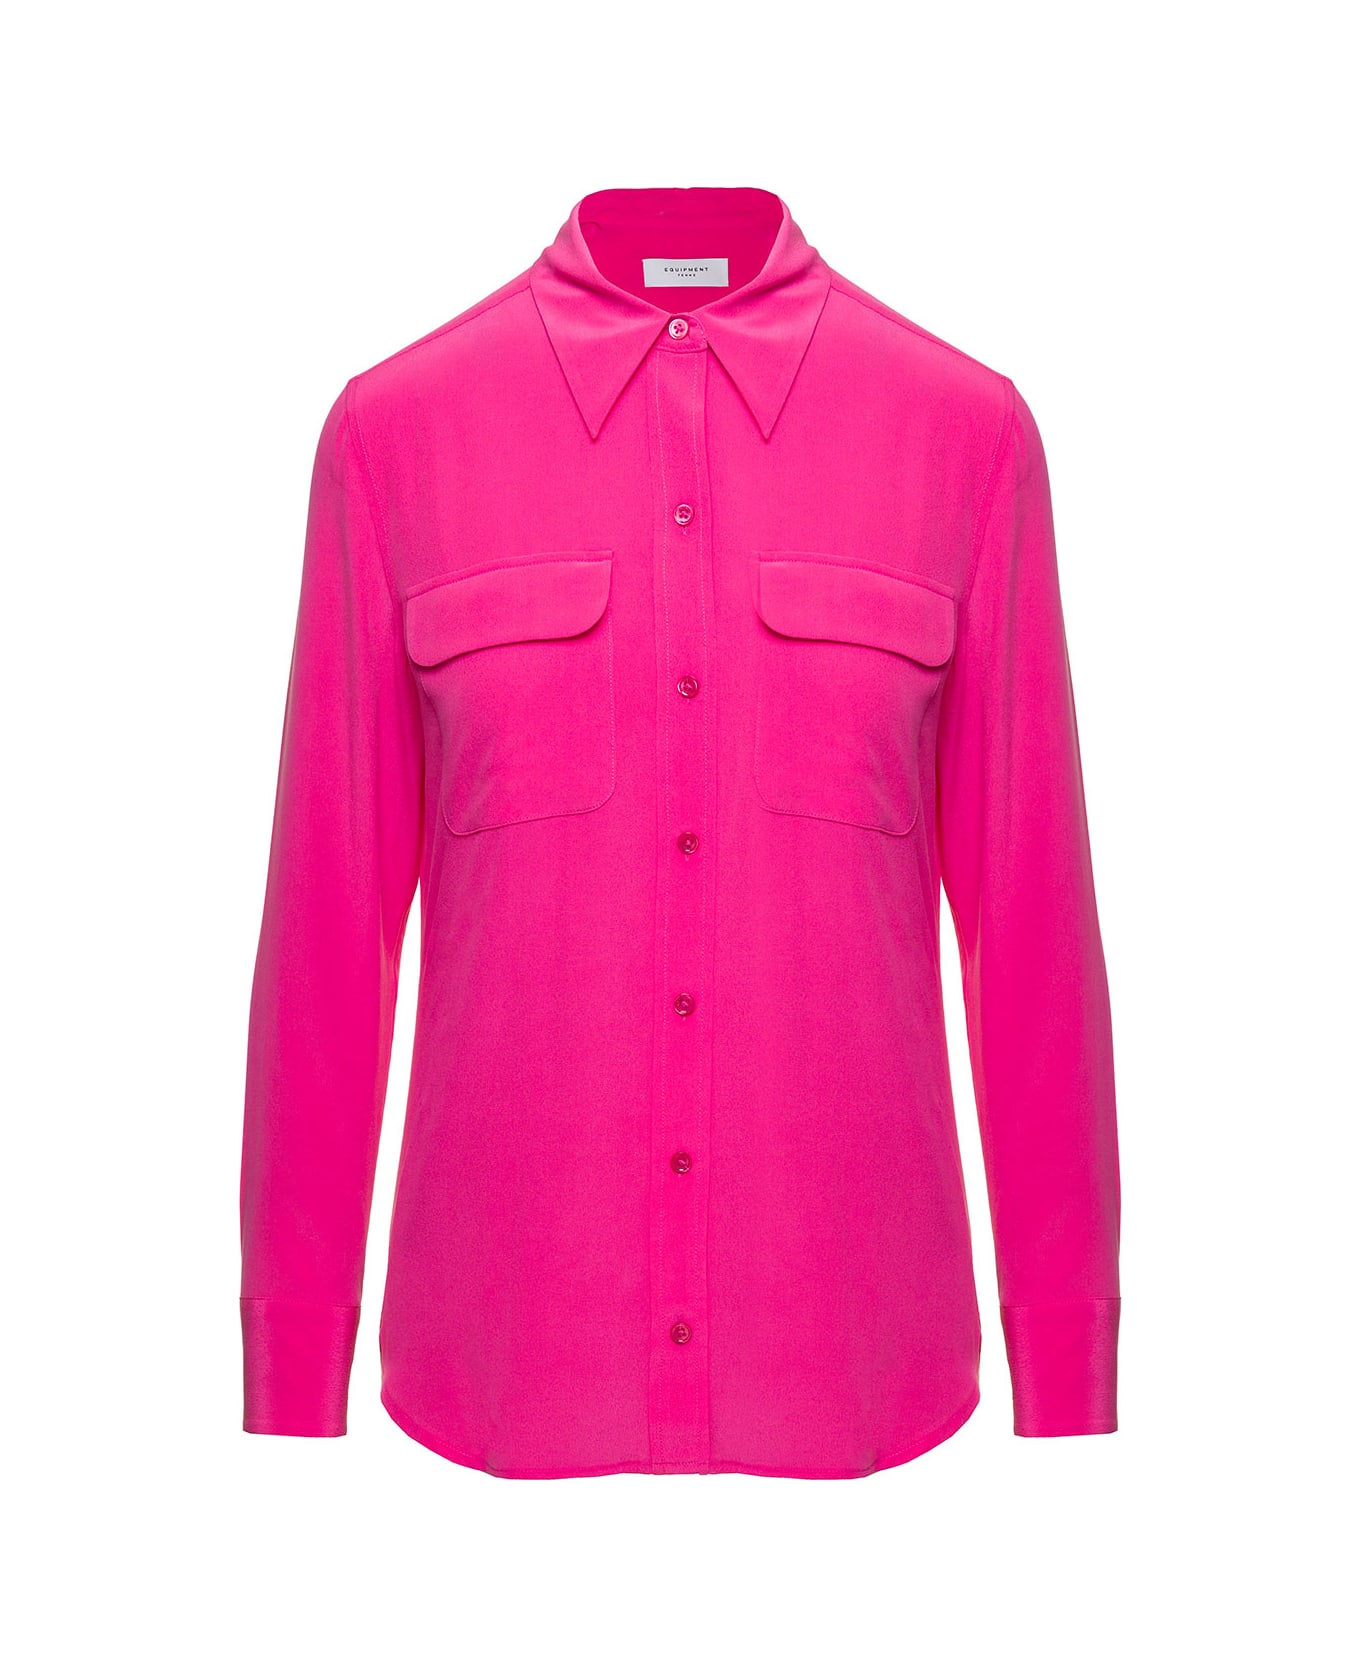 Equipment 'slim Signature' Fuchsia Long Sleeve Shirt With Pockets In Silk Woman - Raspberry Sorbet シャツ